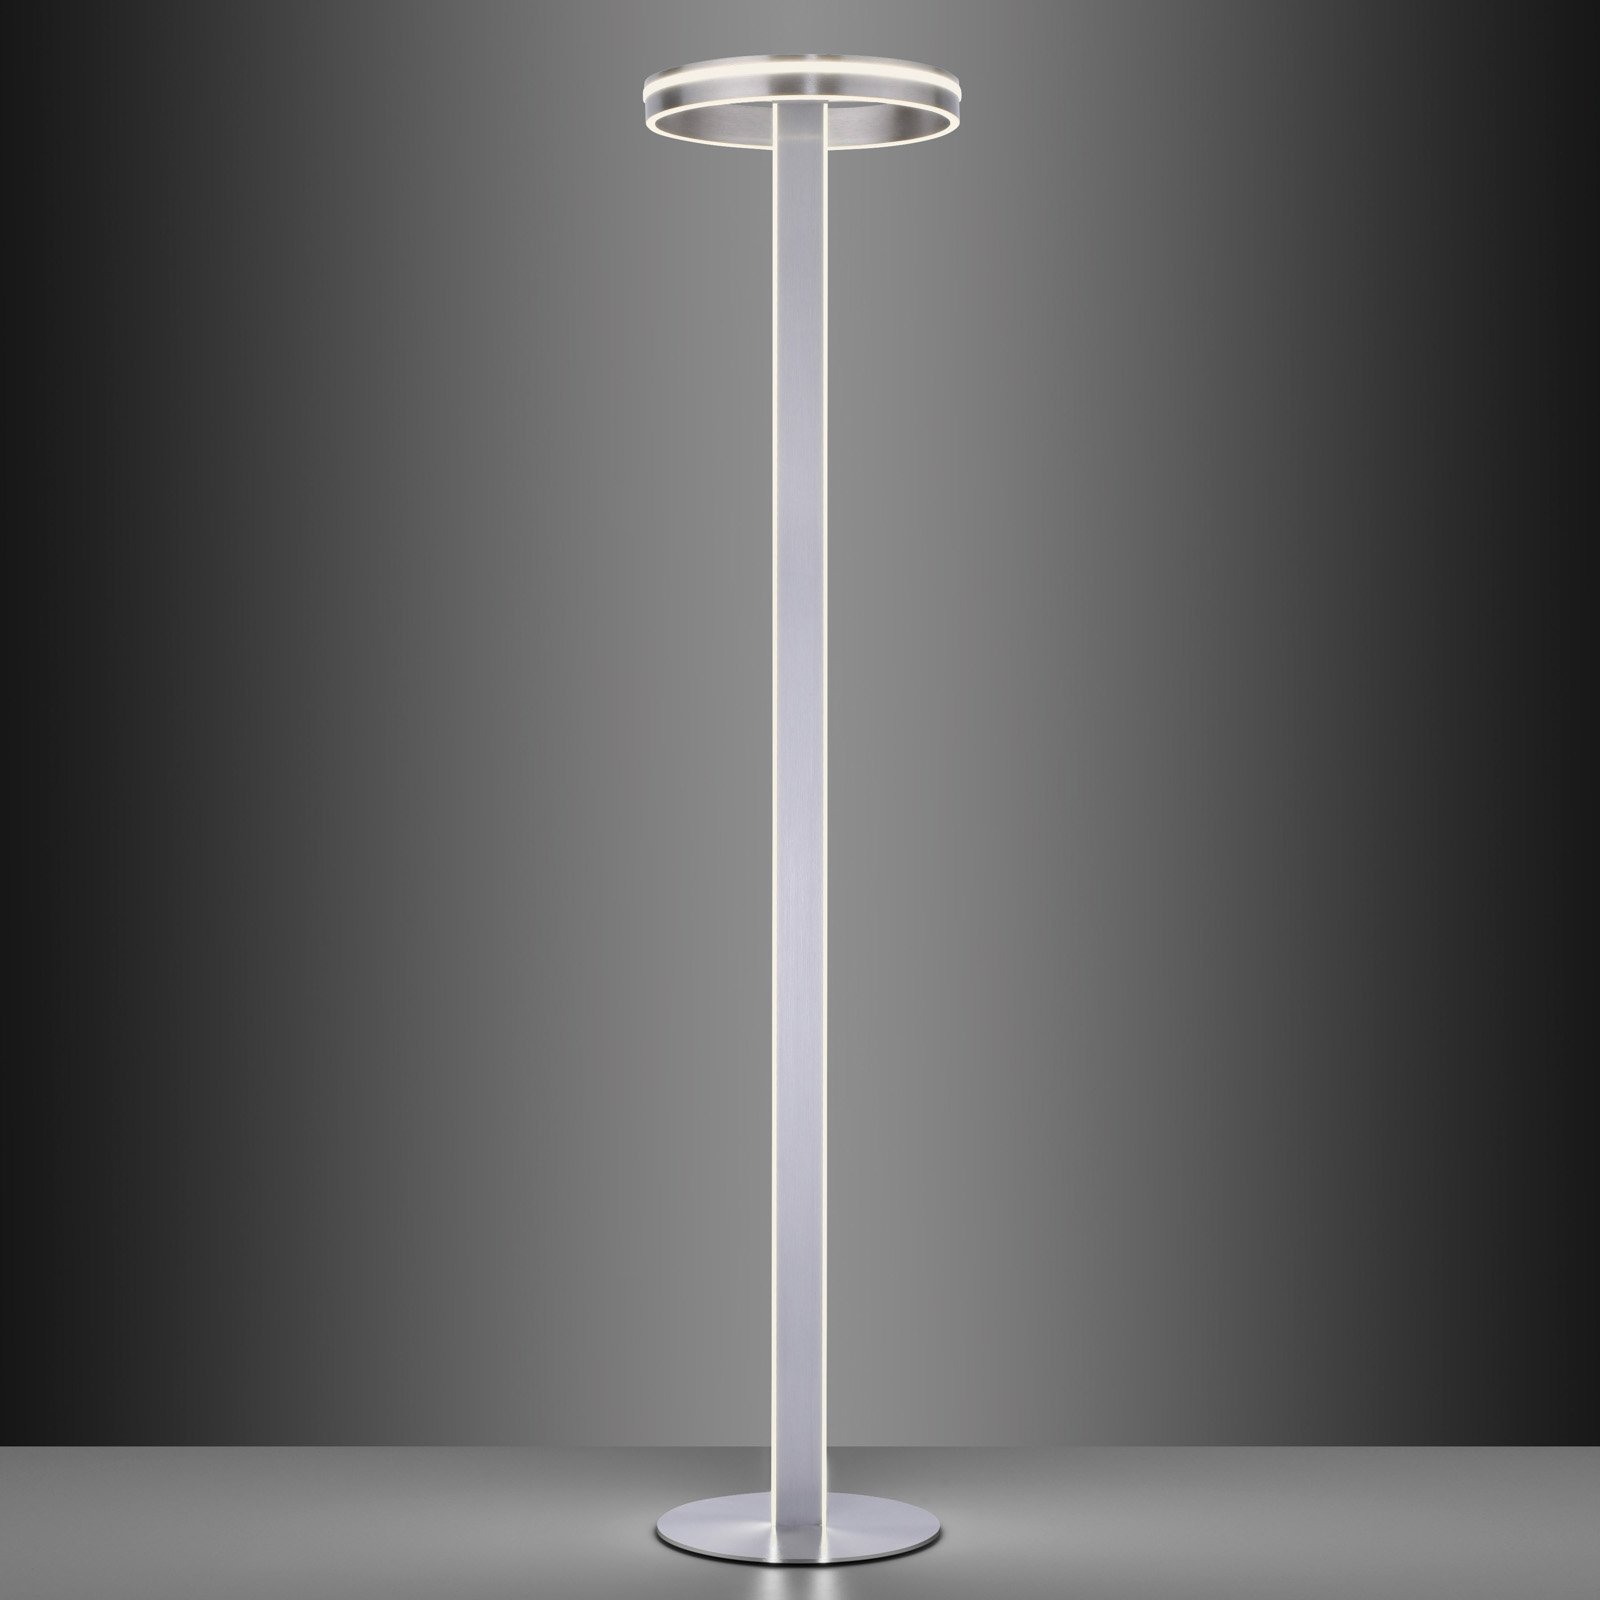 Paul Neuhaus Q-Vito LED vloerlamp, recht met ring